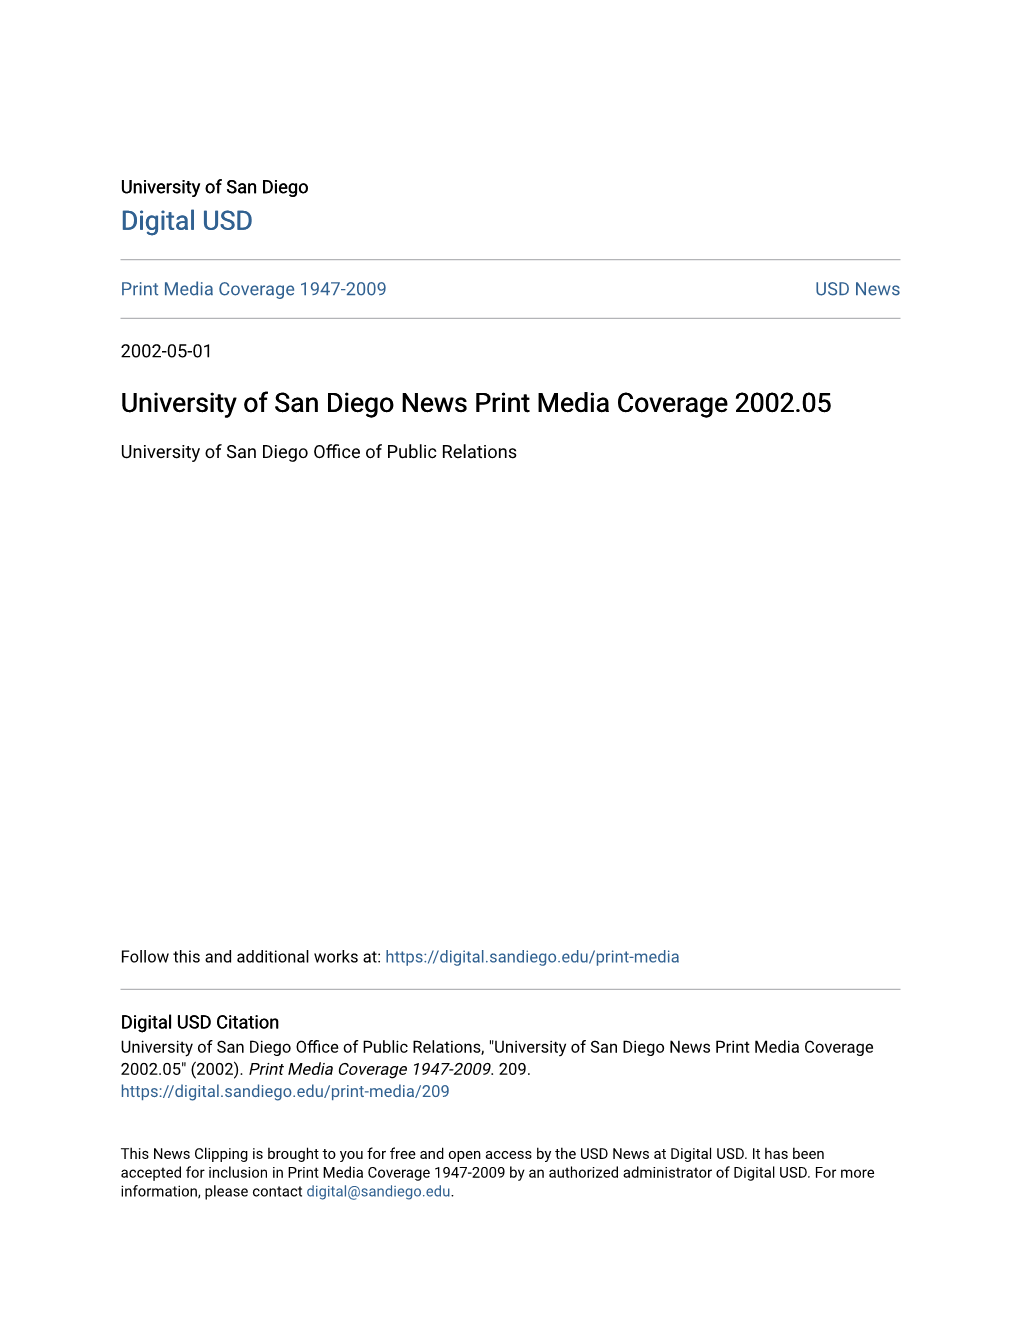 University of San Diego News Print Media Coverage 2002.05